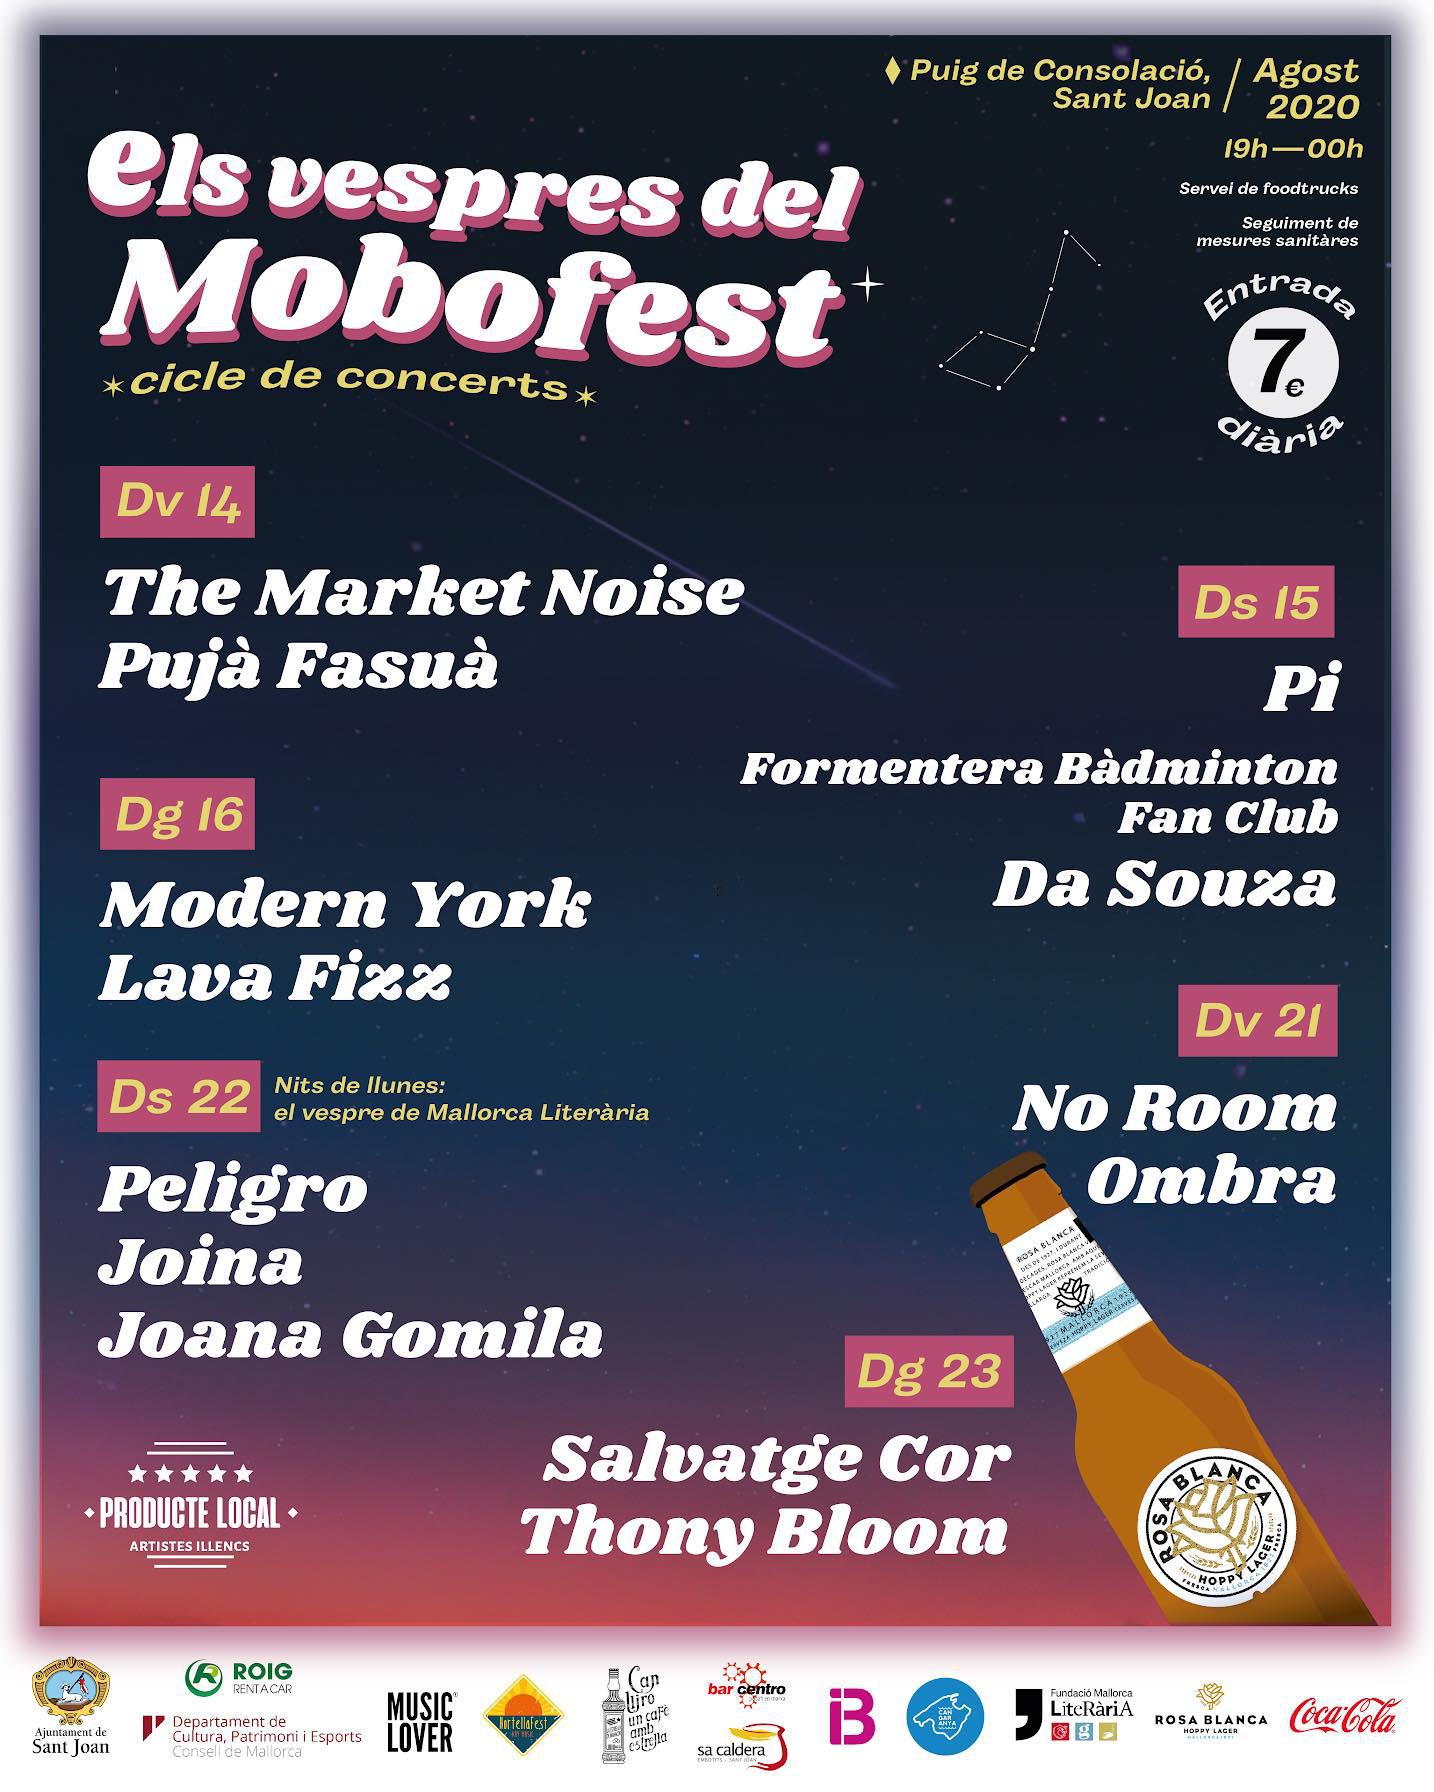 Mobofest 2020